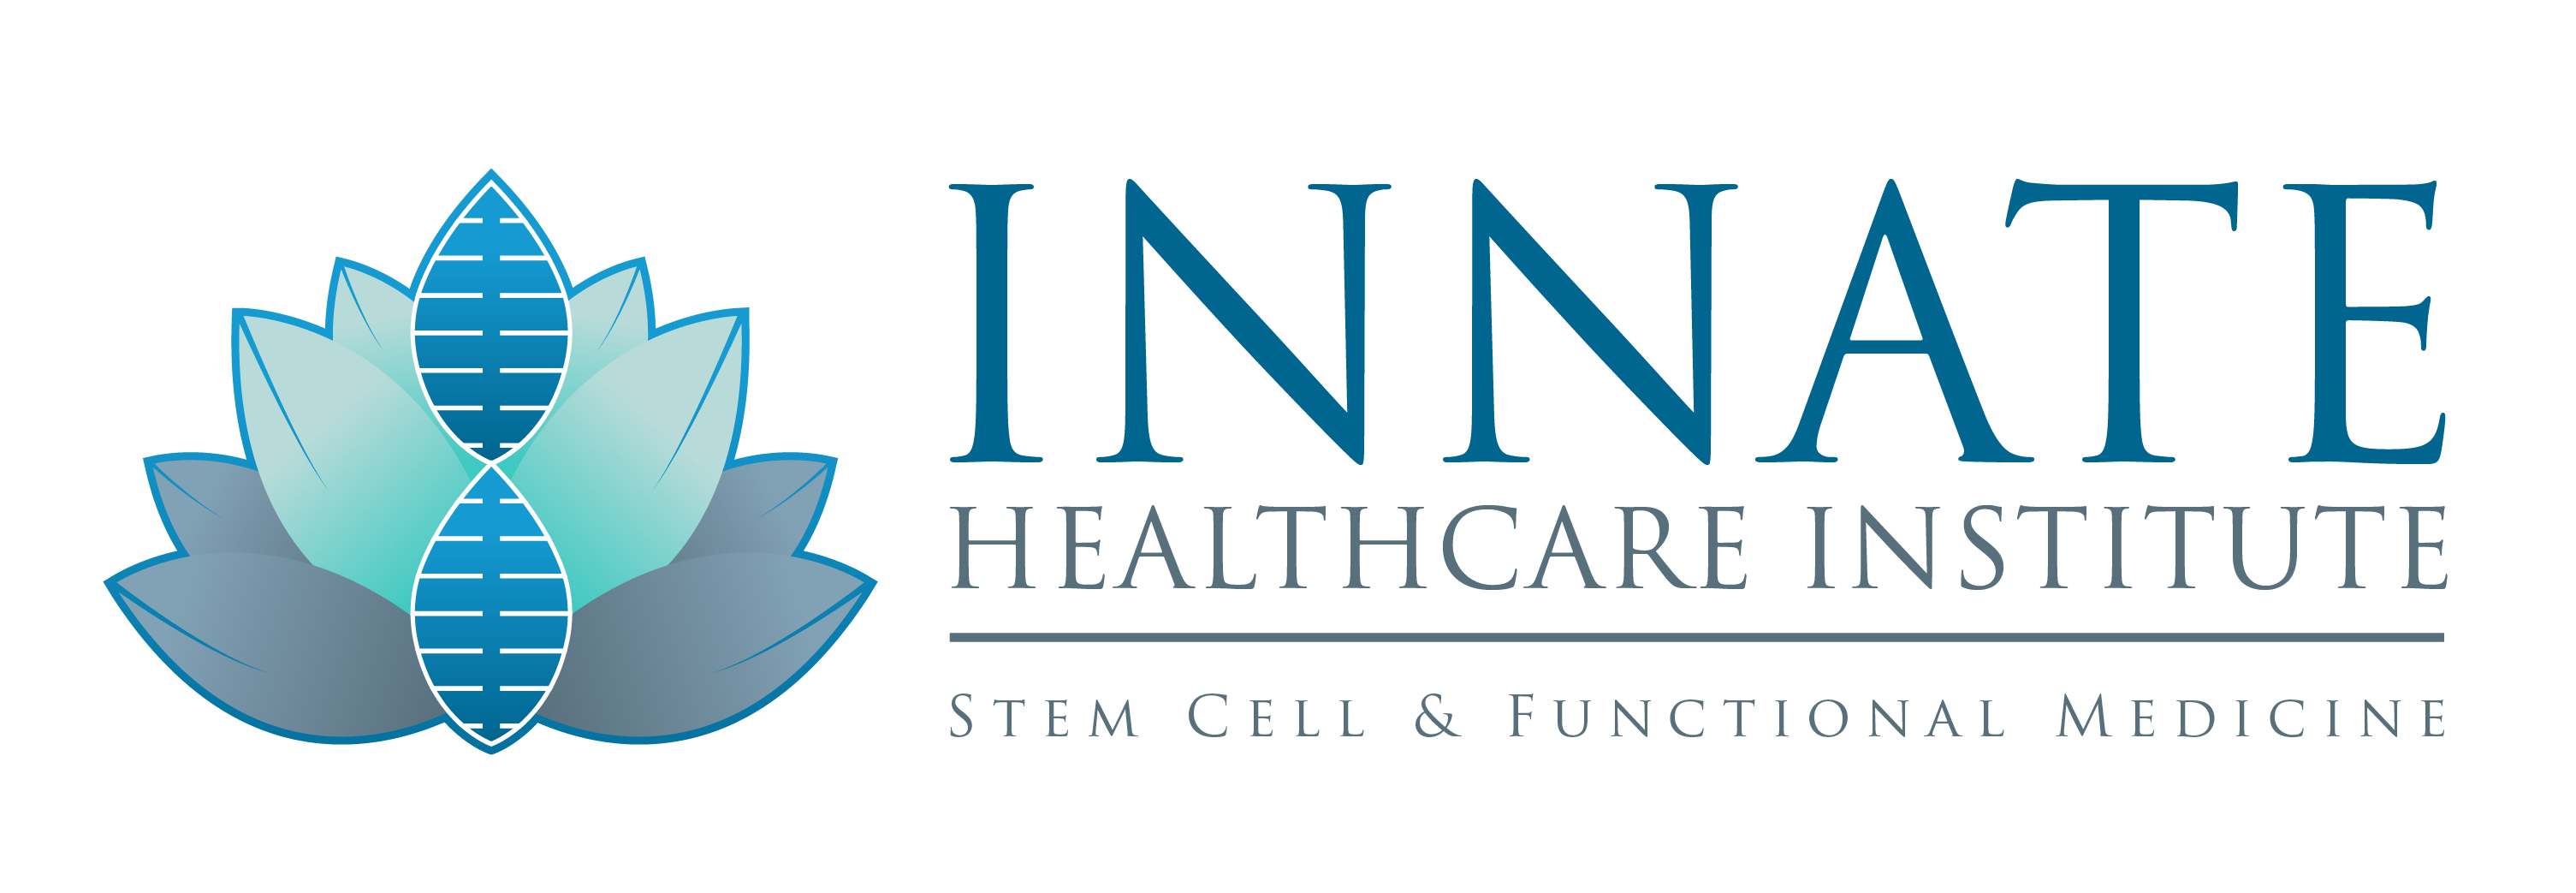 innate healthcare Logo stem cell therapy clinic in phoenix arizona